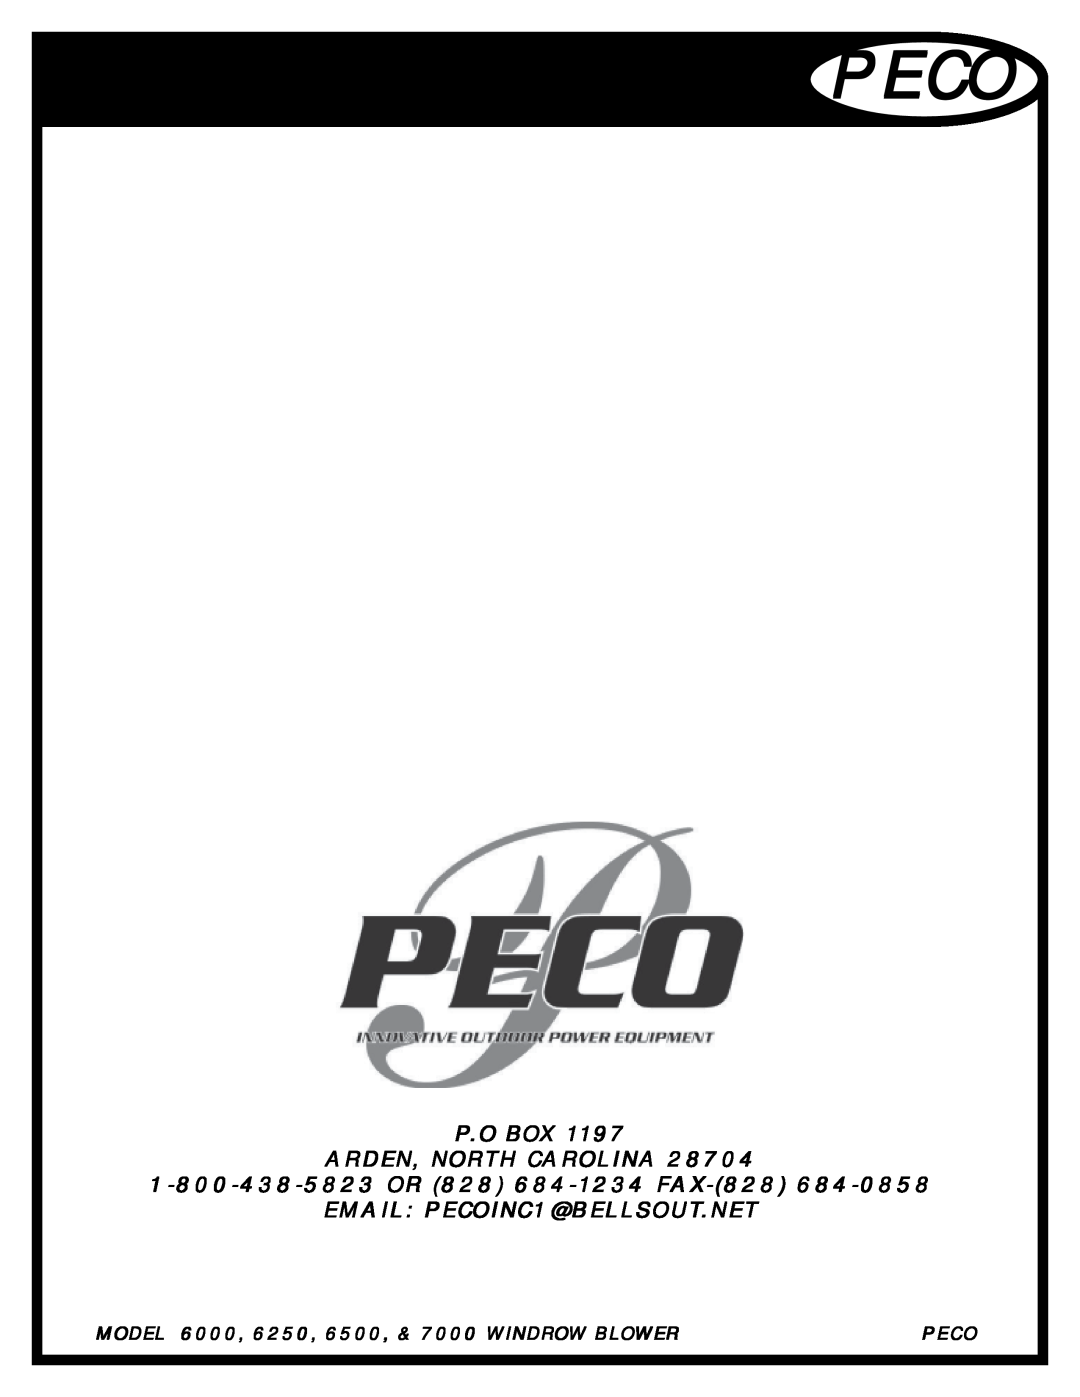 Pecoware 6000 manual Peco, P.O Box Arden, North Carolina, EMAIL: PECOINC1@BELLSOUT.NET 